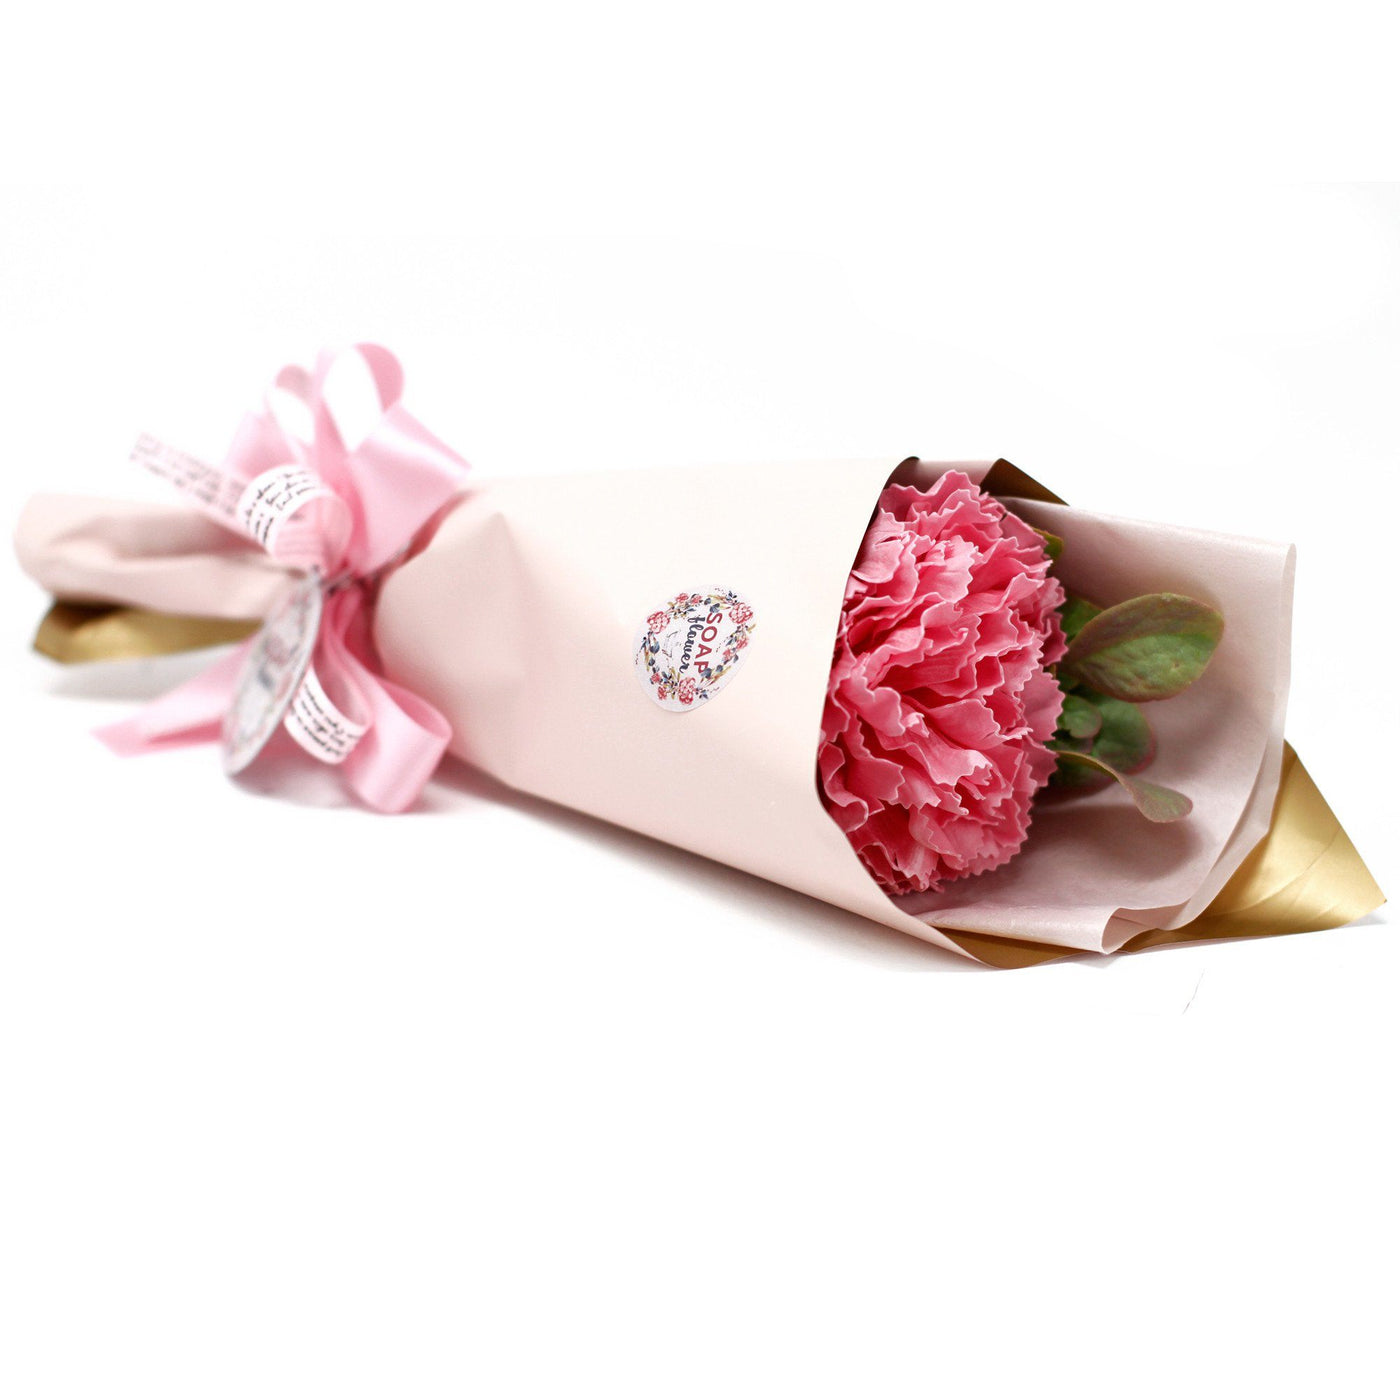 Luxury Pink Body Soap Flower Carnation Bouquet Bath Gift Set.